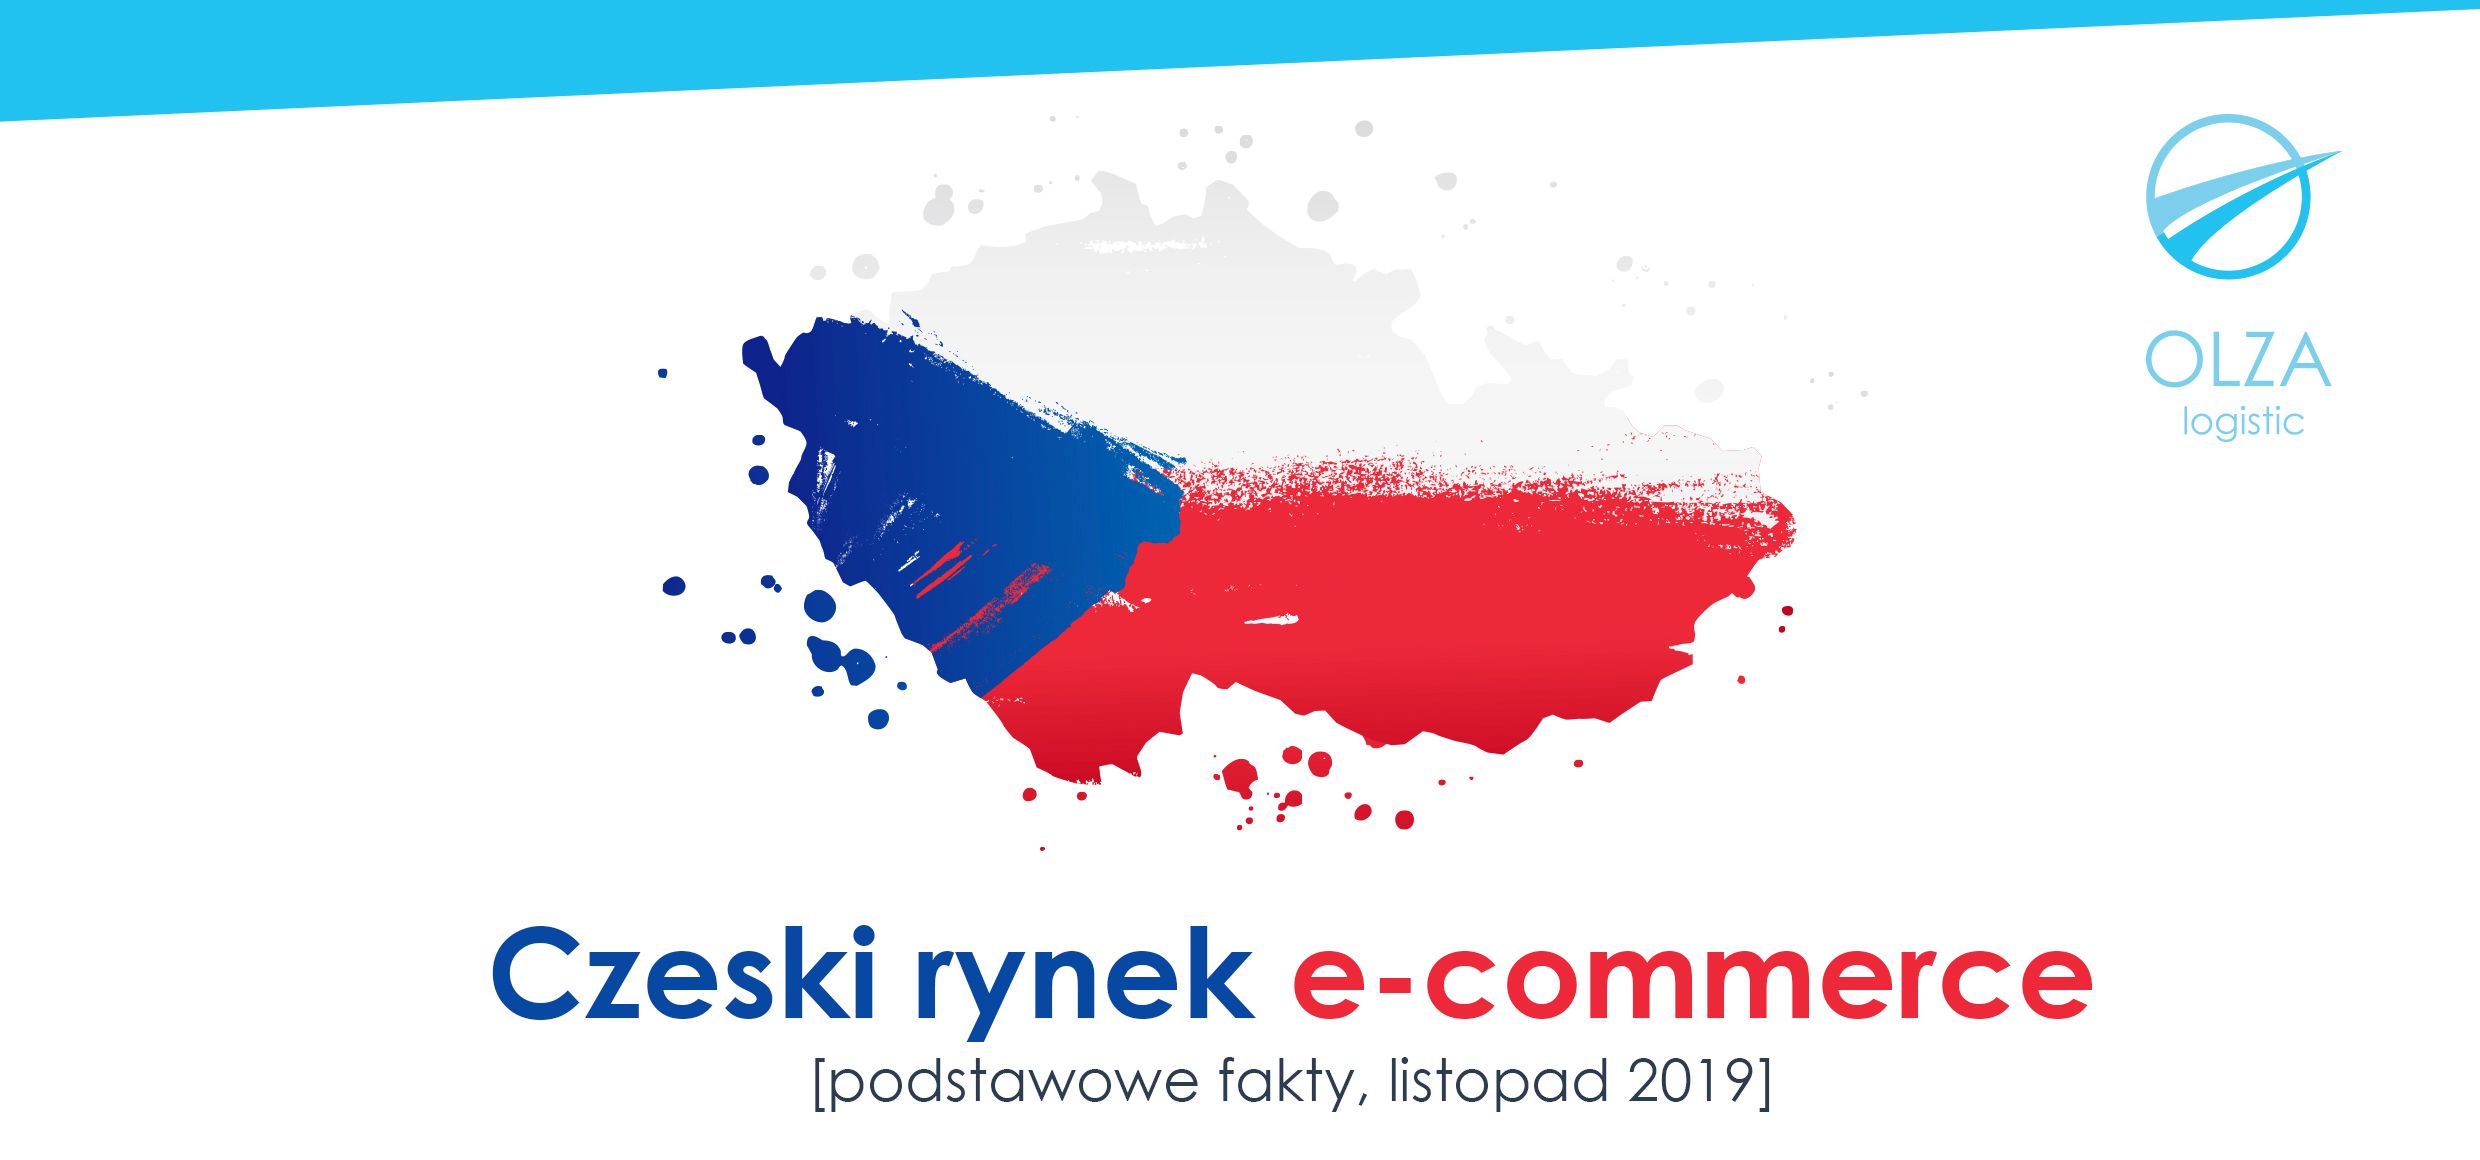 Czeski rynek e-commerce - fact sheet